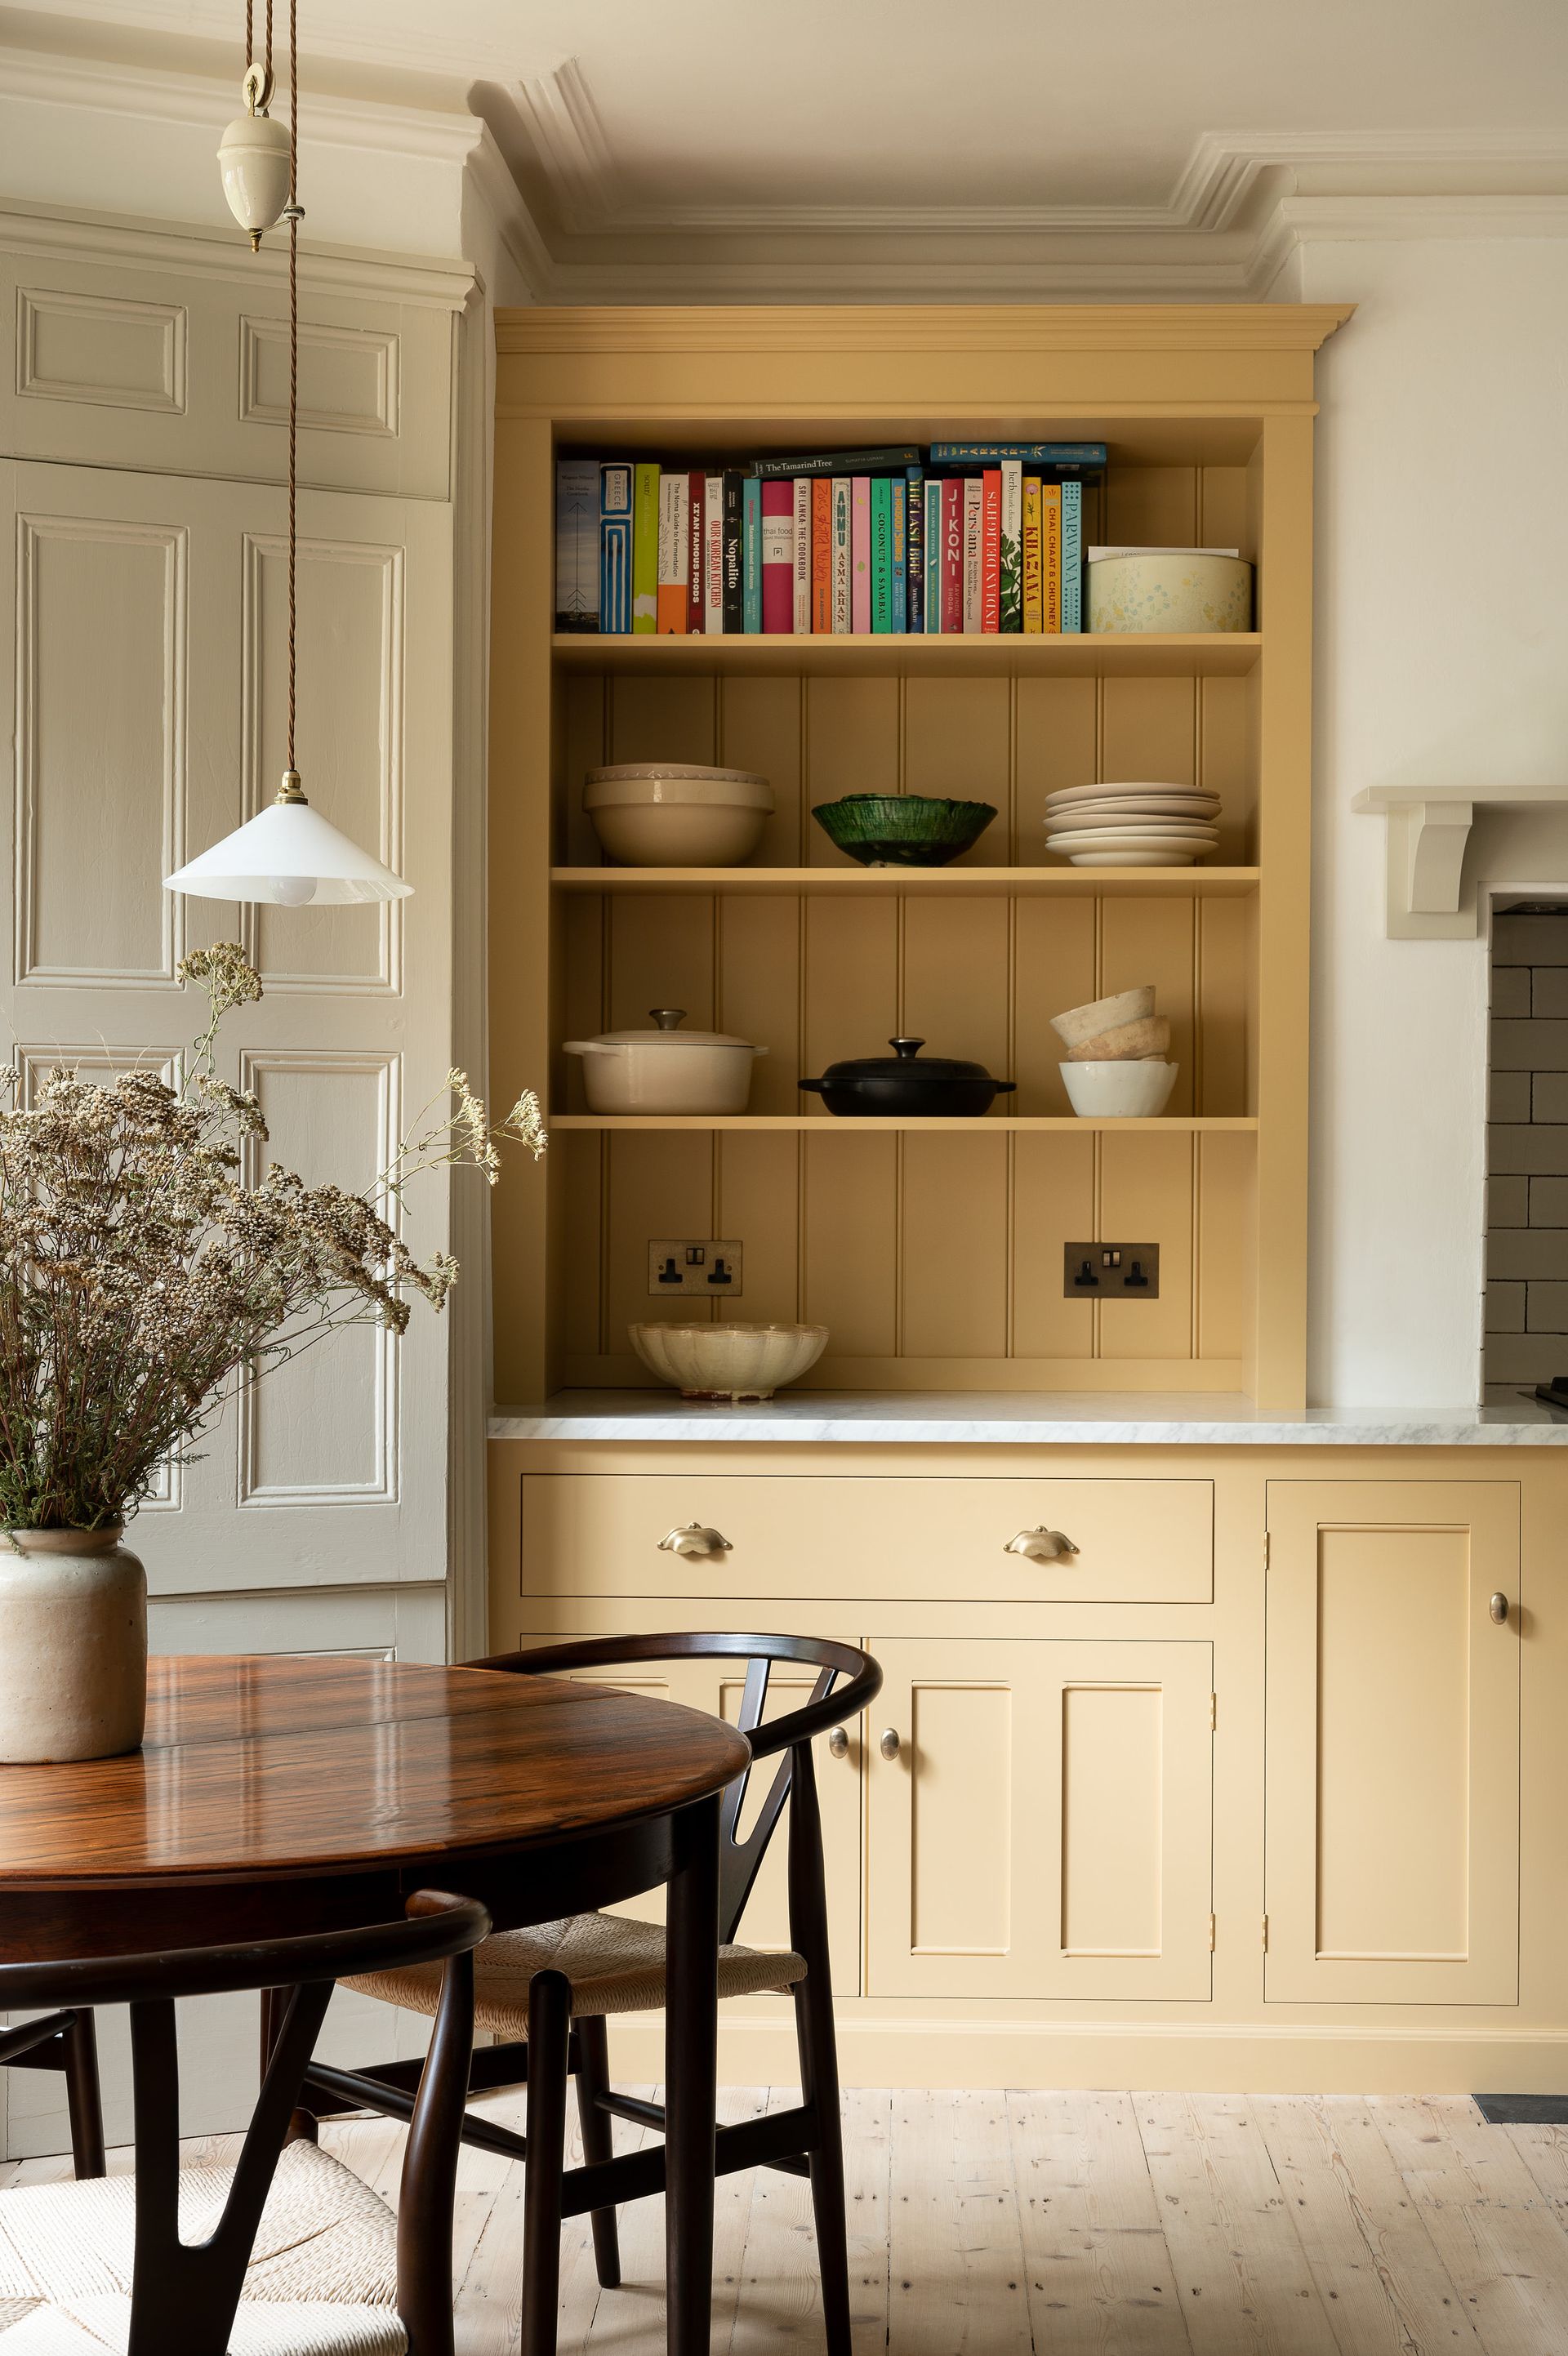 8 pantry color ideas – the 'it' tones for kitchen storage | Livingetc